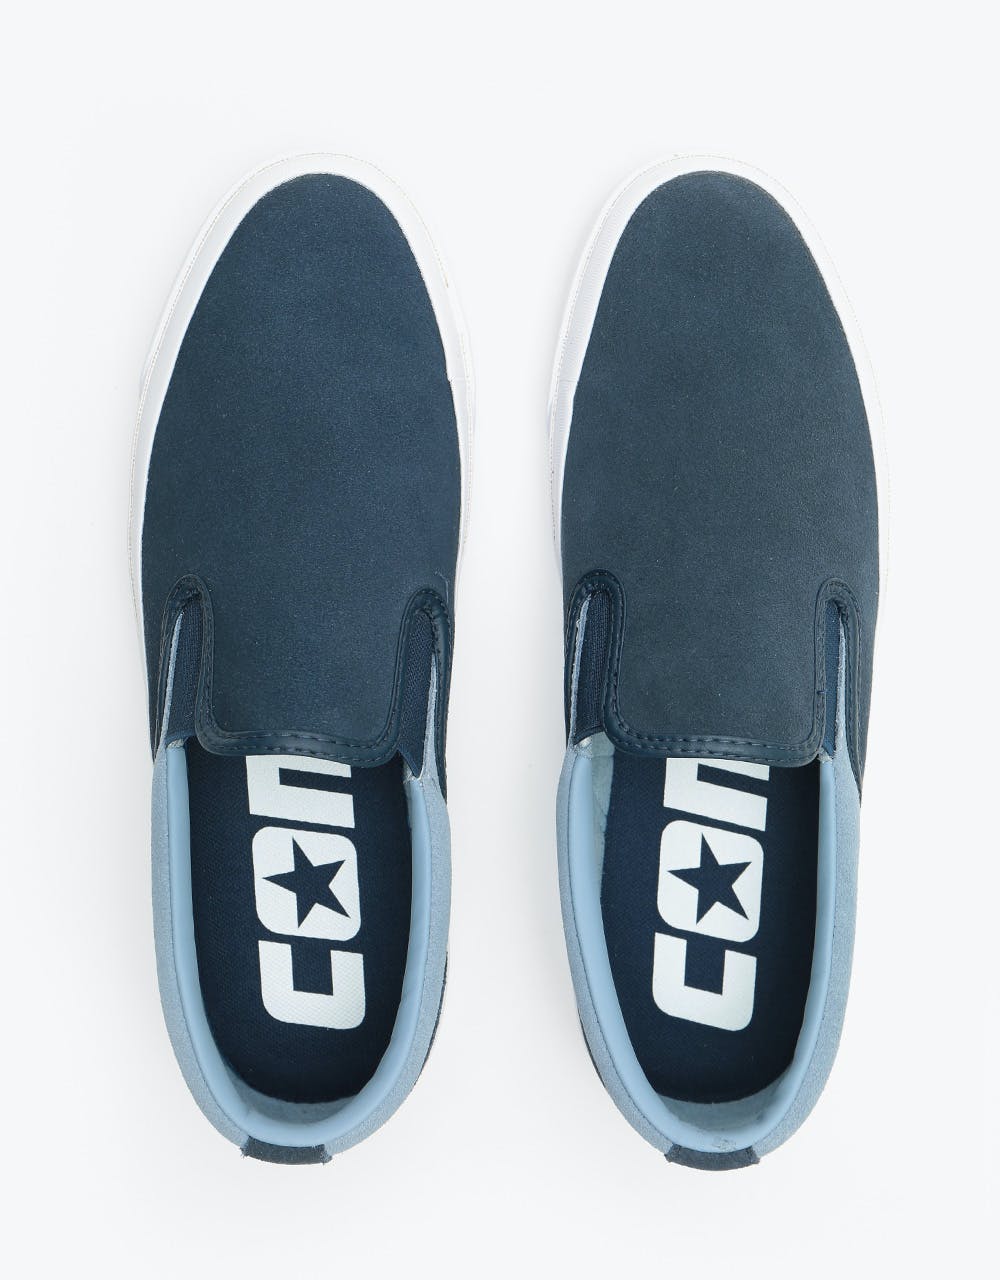 Converse One Star CC Slip Pro Skate Shoes - Obsidian/Blue Slate/White